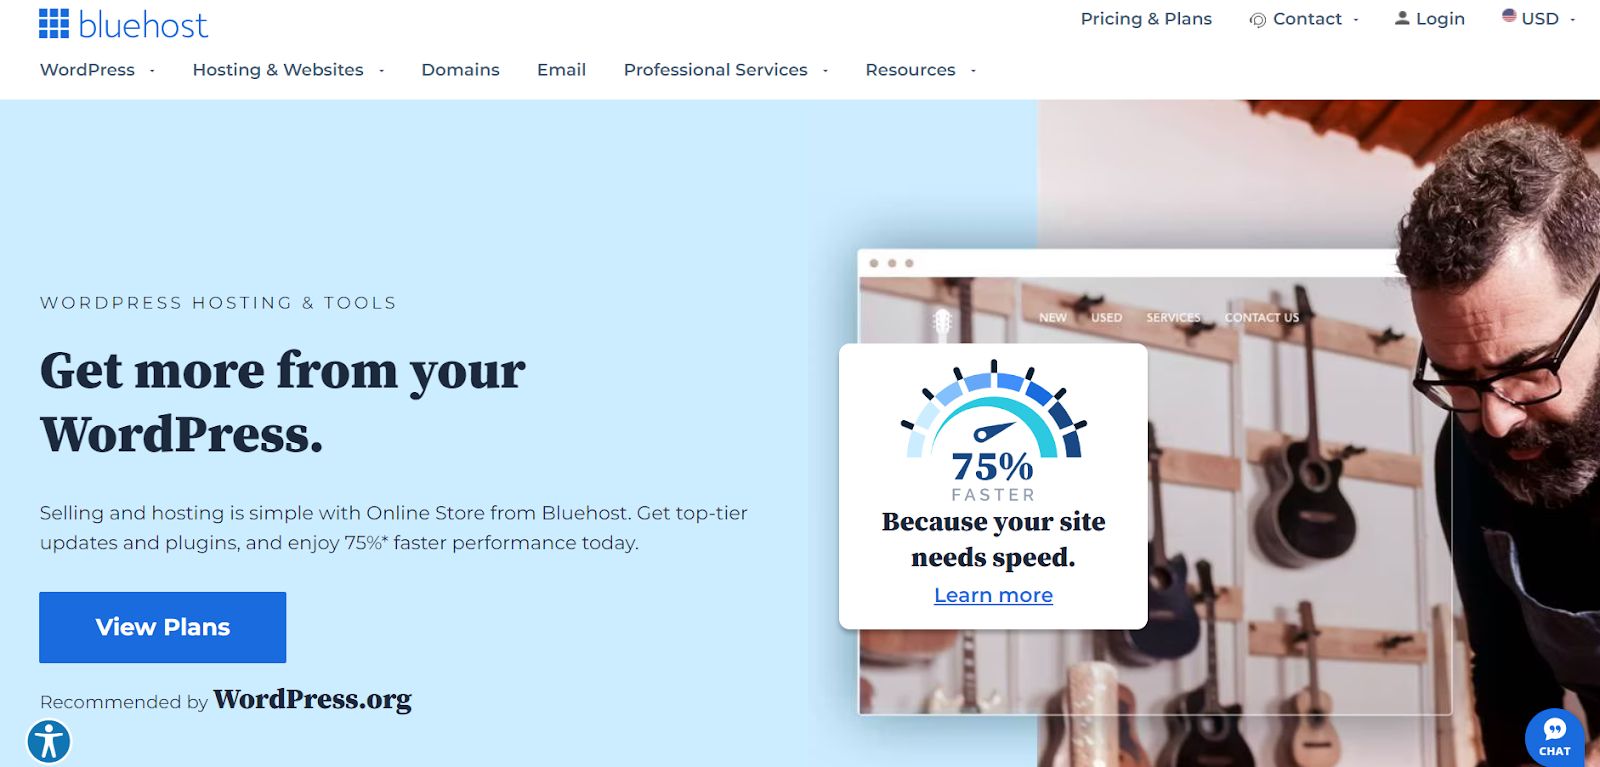 Bluehost WordPress hosting page.